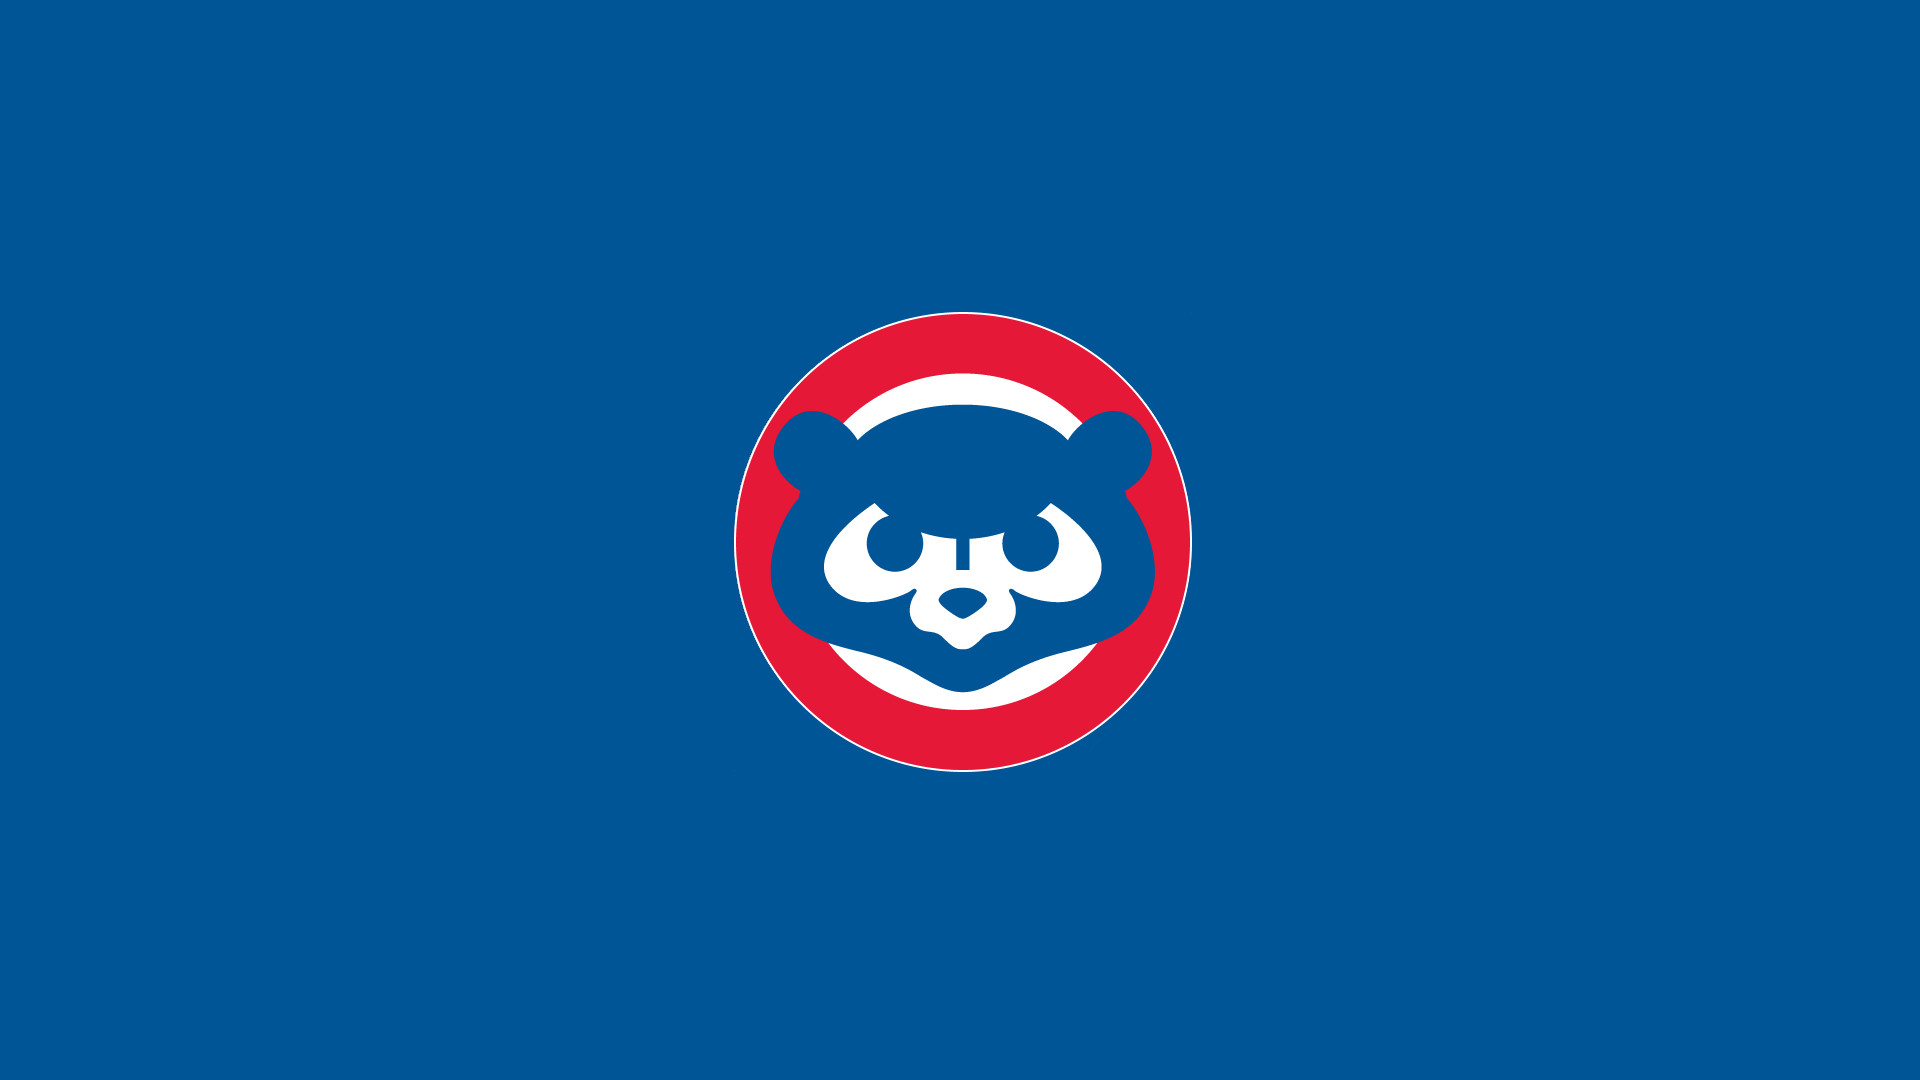 Best 20 Cubs wallpaper ideas on Pinterest Chicago cubs wallpaper, Did the cubs win and Chicago cubs mlb